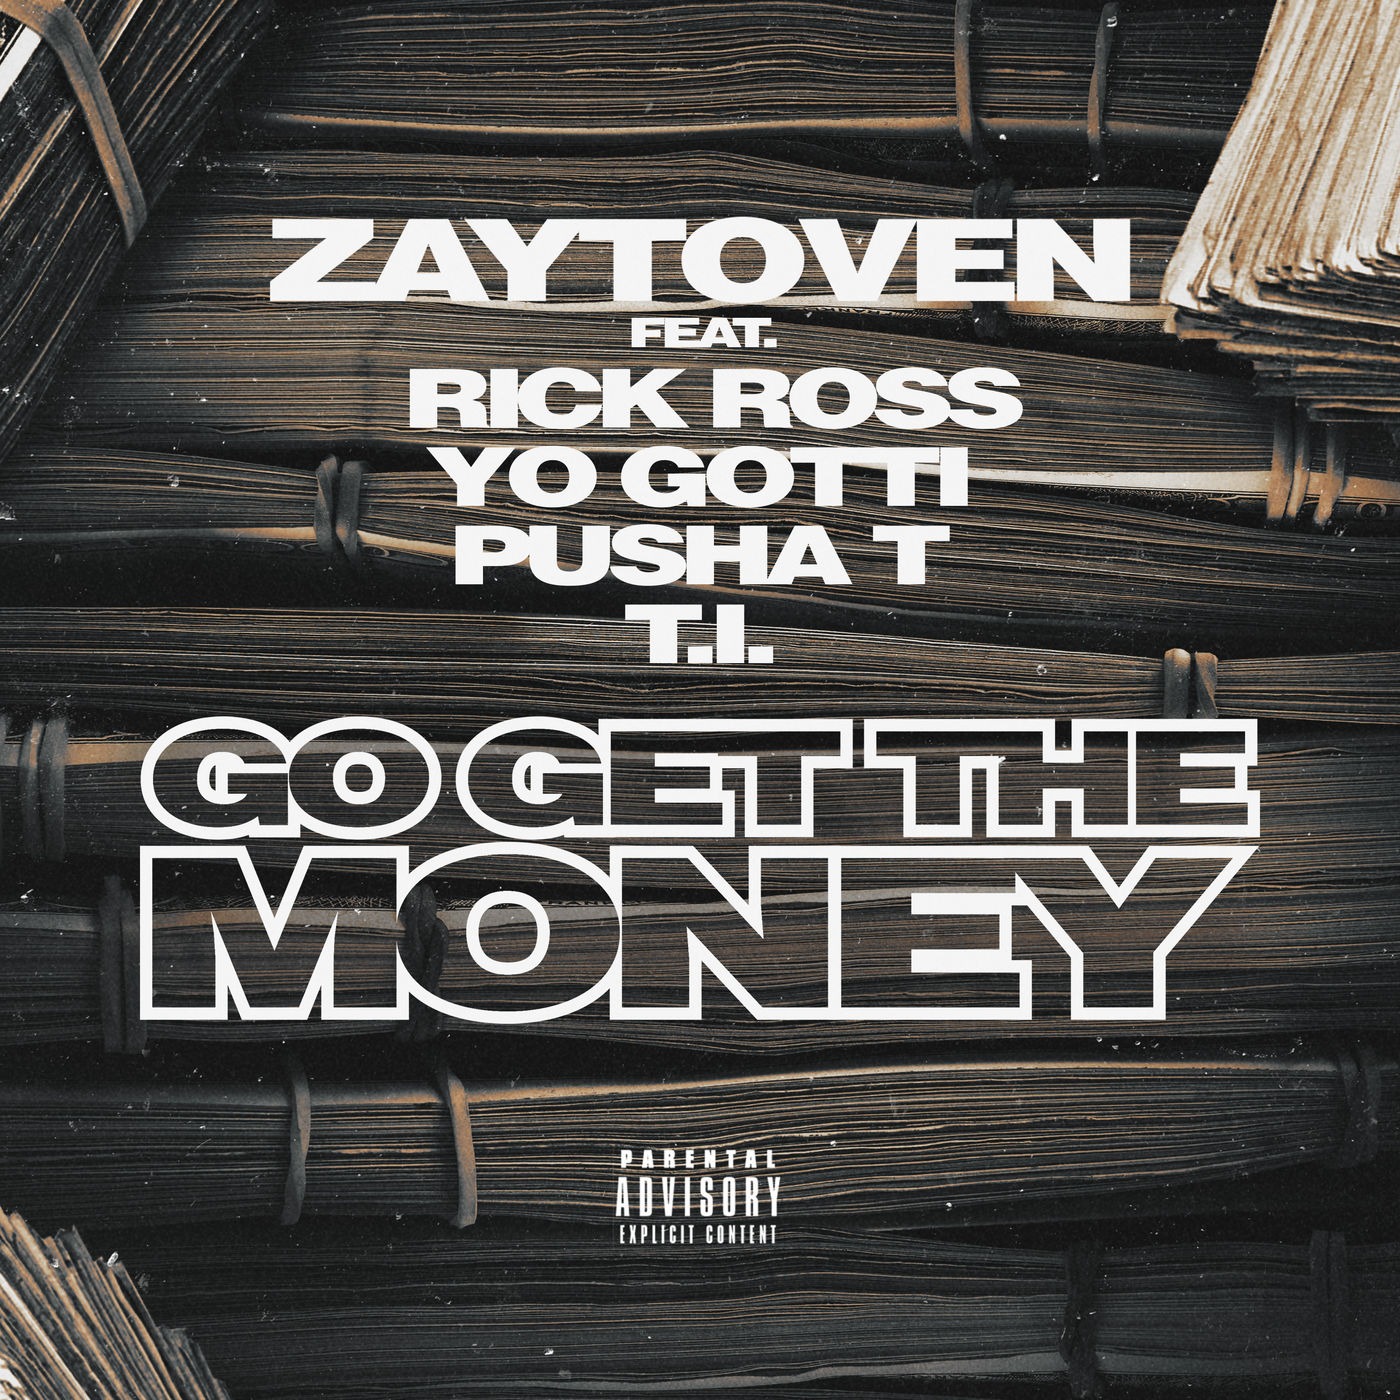 New Music: Zaytoven – “Go Get The Money” Feat. Rick Ross, Yo Gotti, Pusha T & T.I. [LISTEN]